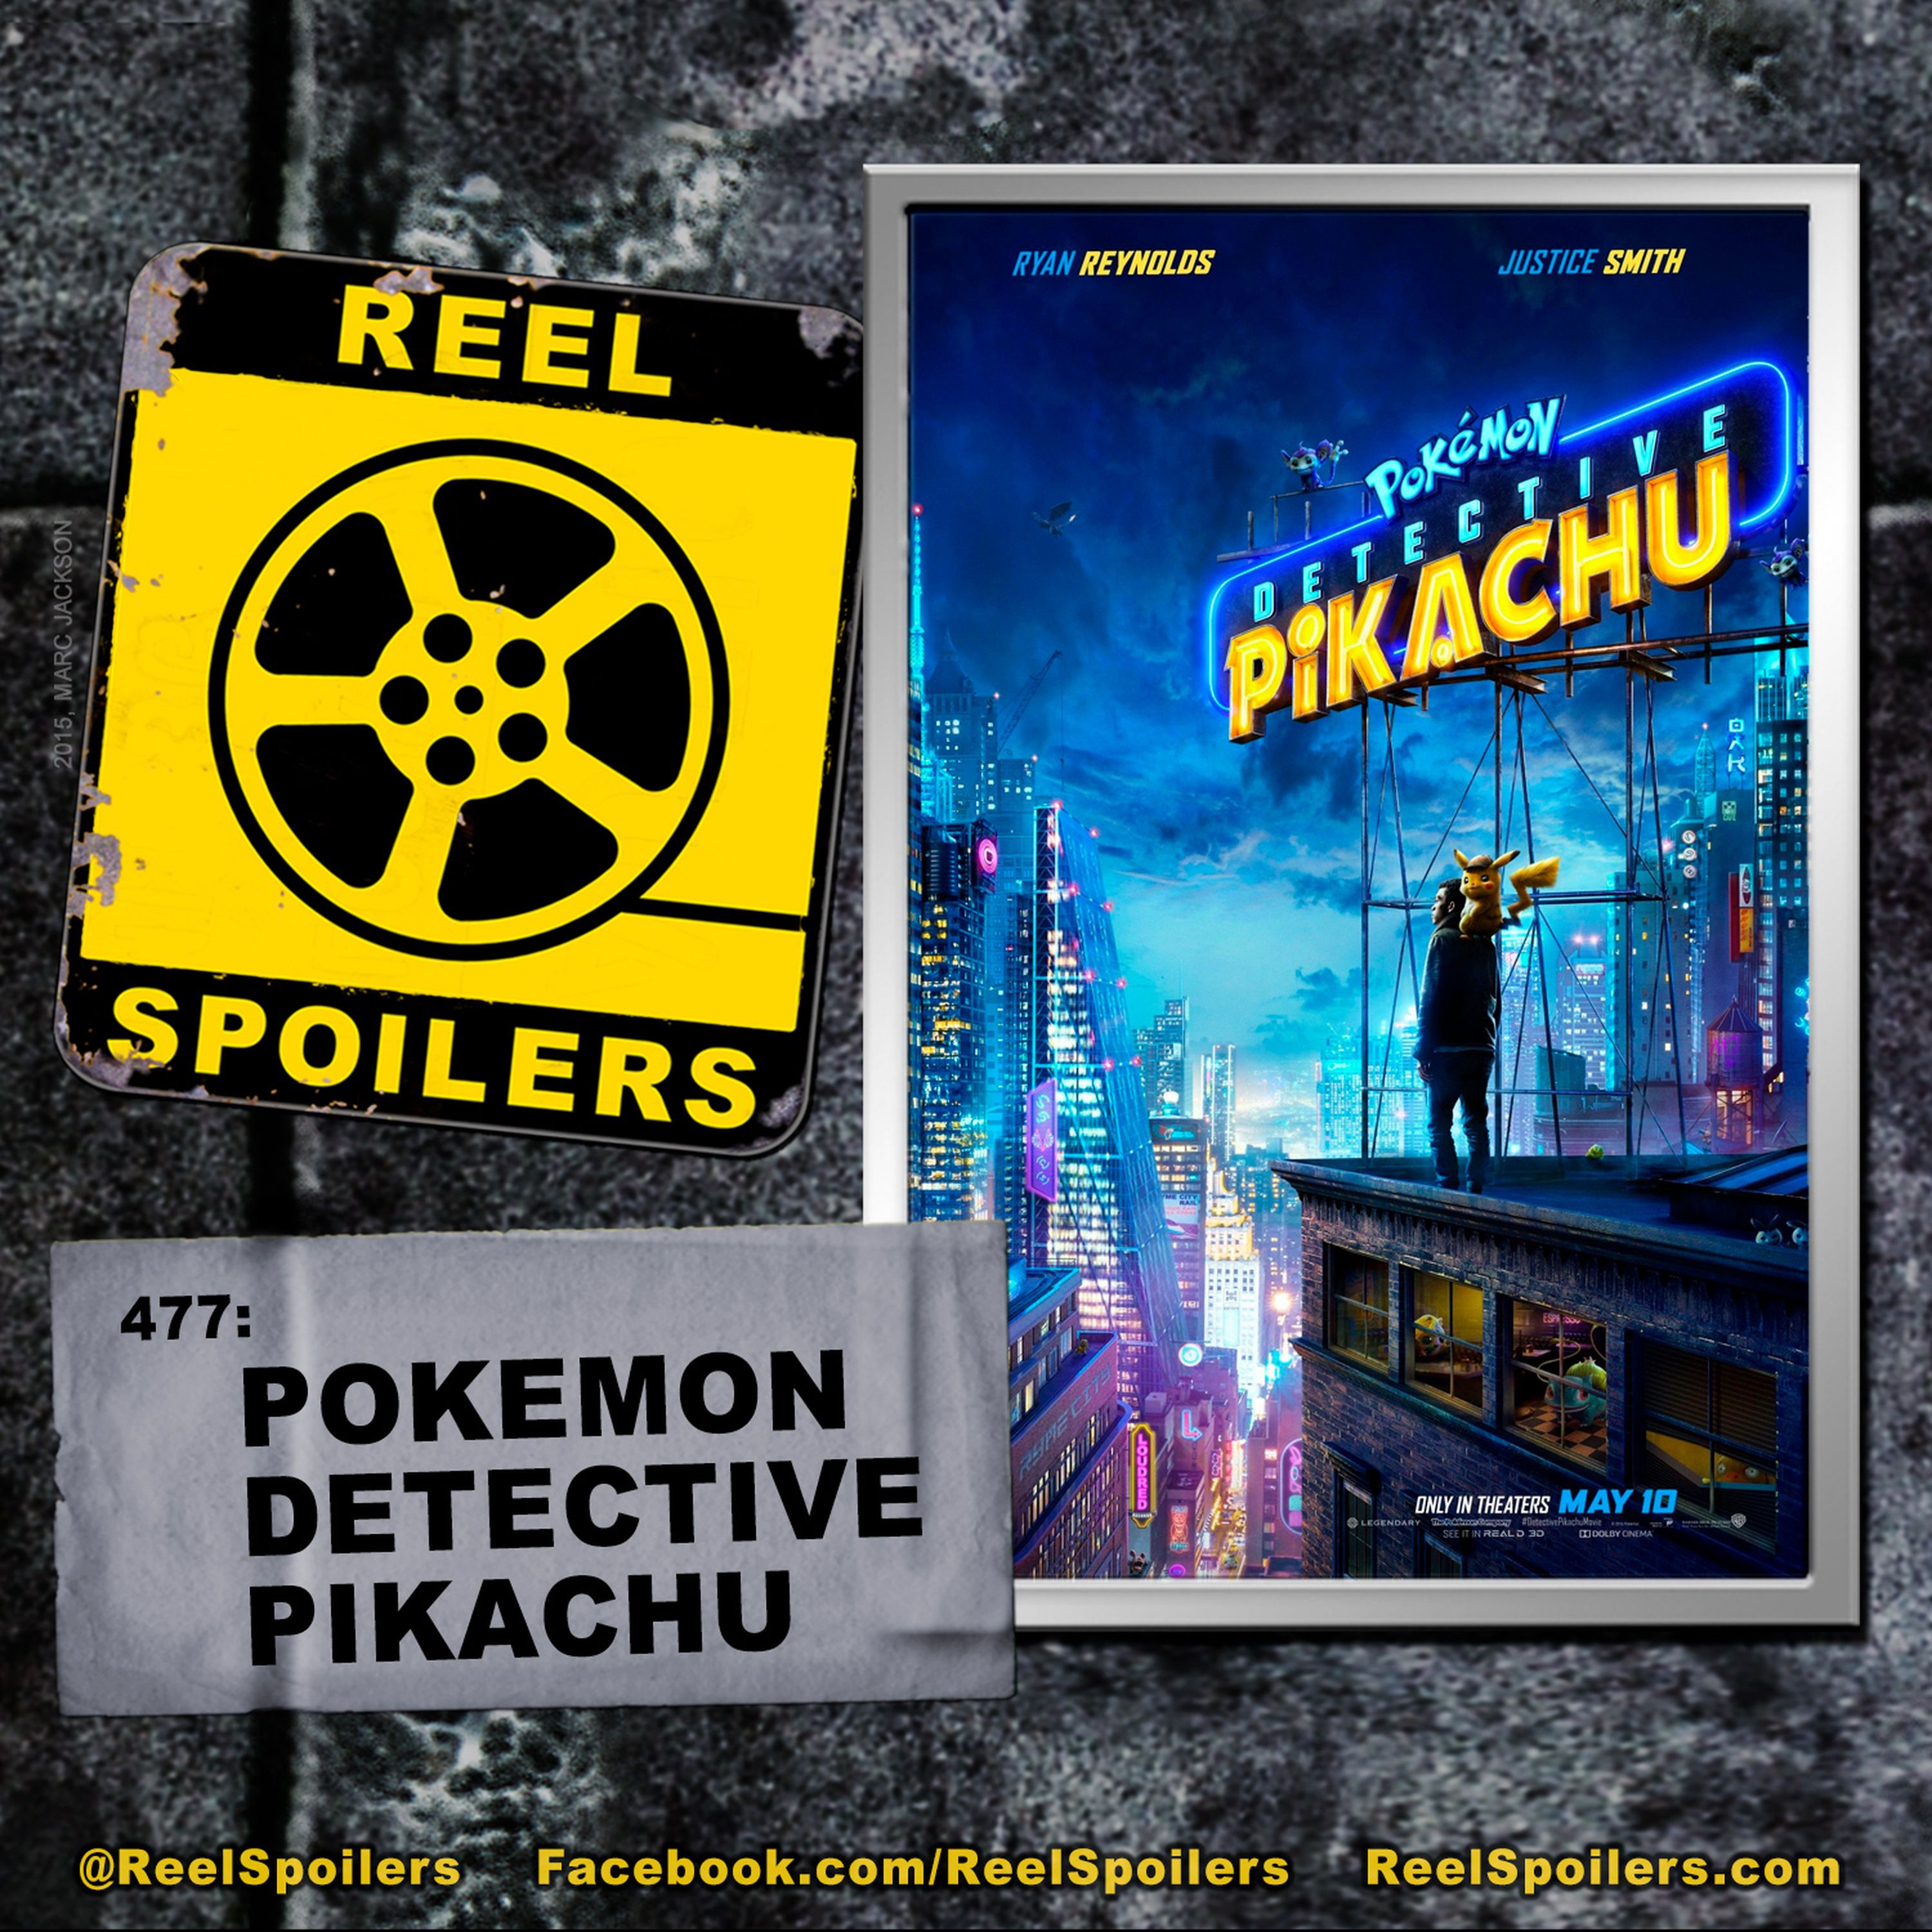 477: 'Pokemon Detective Pikachu' Starring Ryan Reynolds, Justice Smith Image